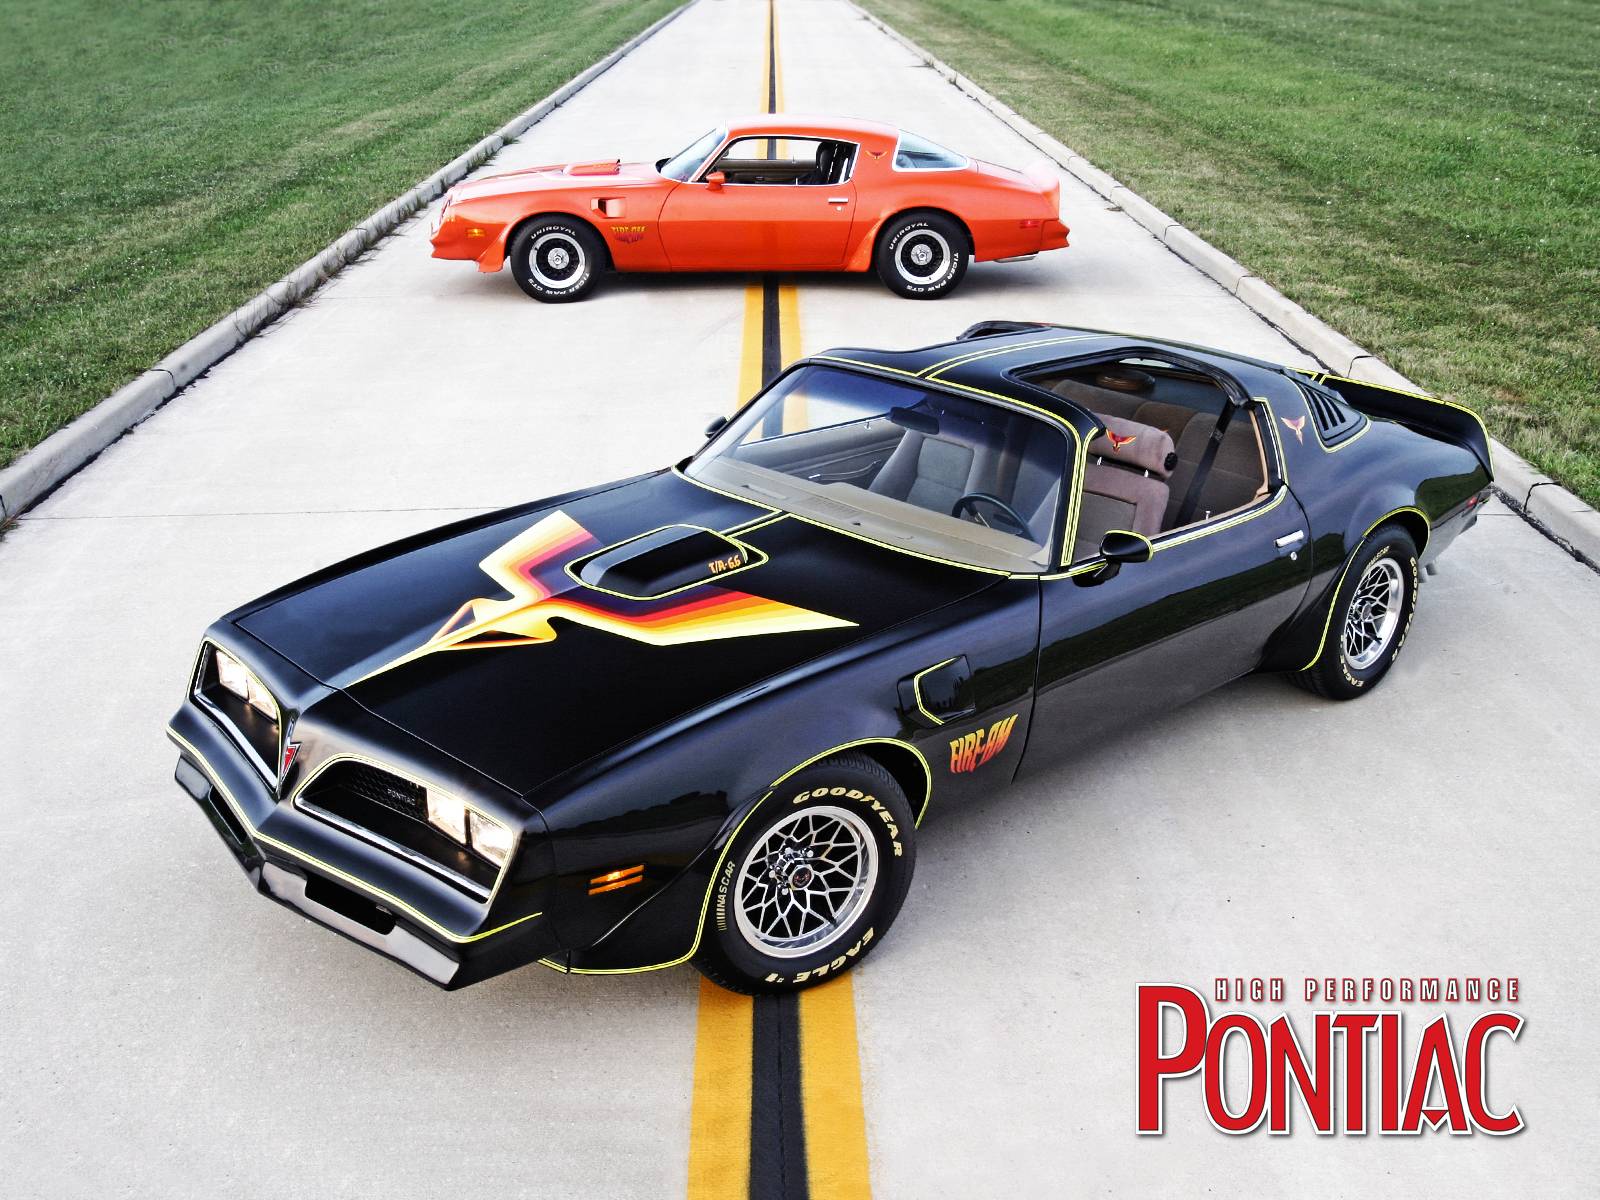 Pontiac Trans Am Image & Wallpaper on Jeweell